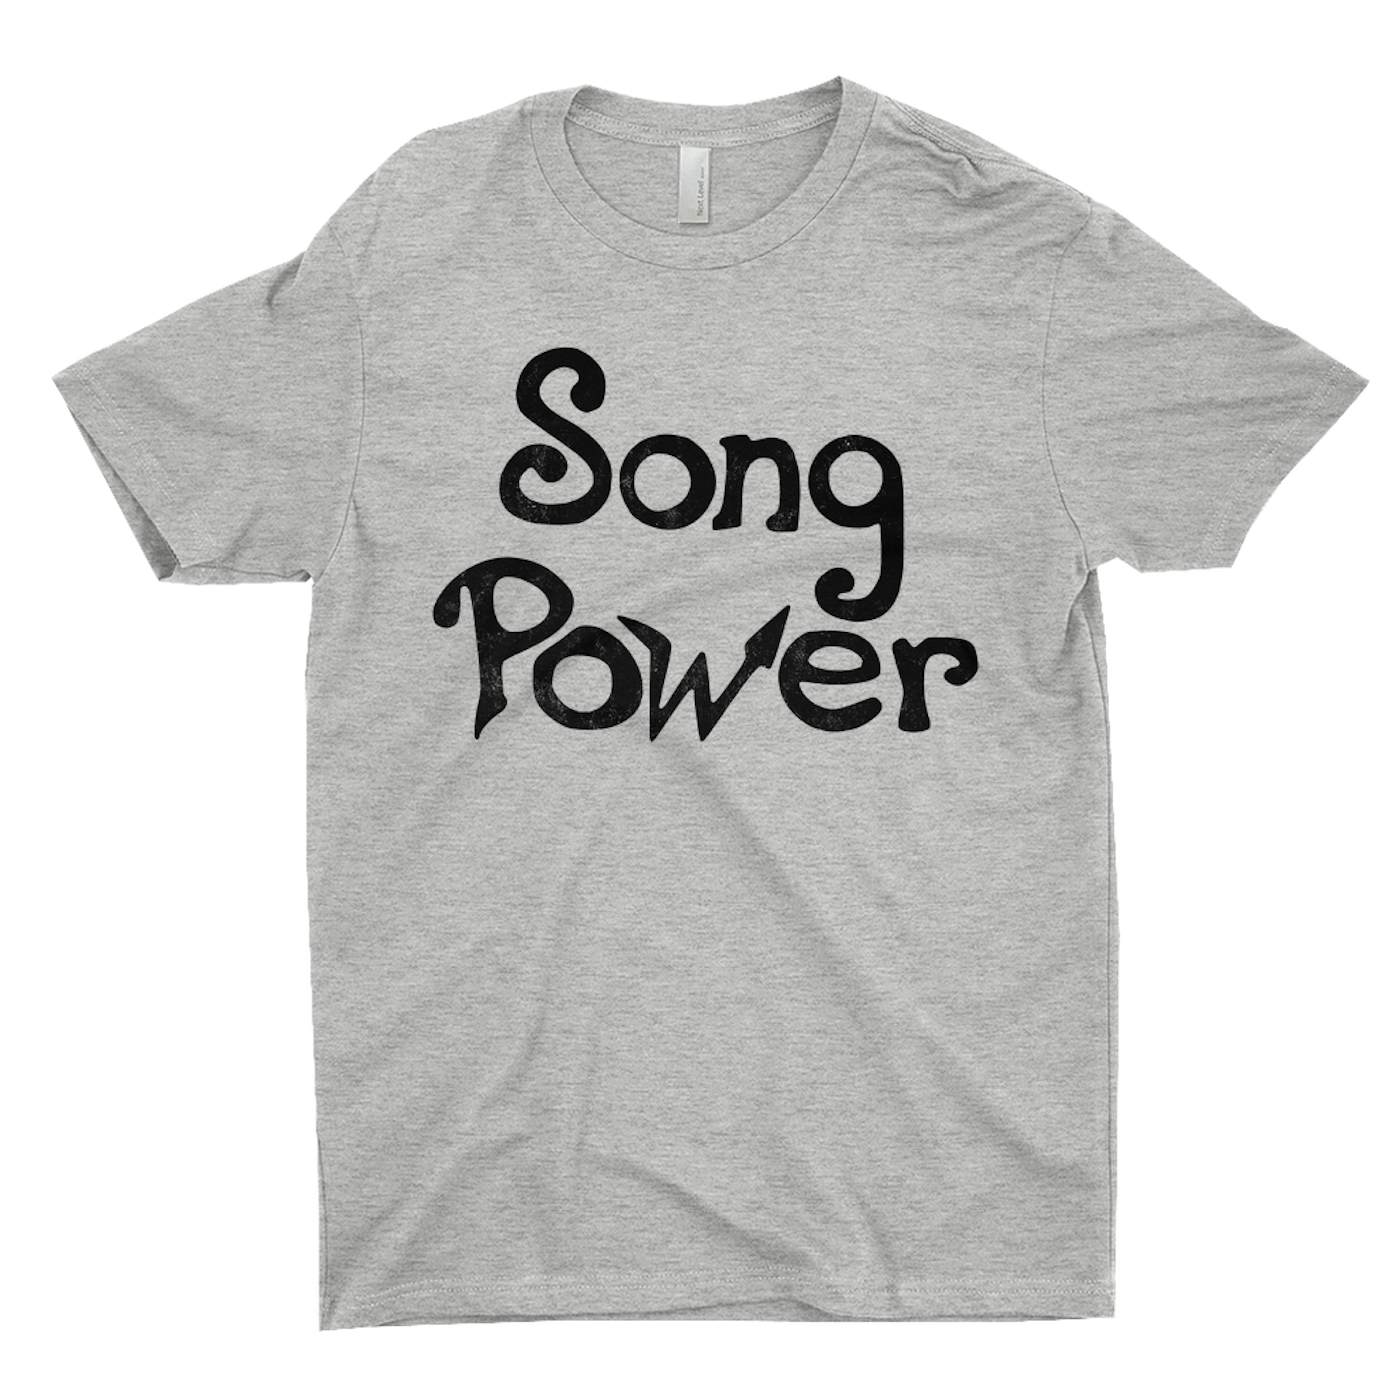 The Eagles T-Shirt | Song Power Worn By Glenn Frey The Eagles Shirt